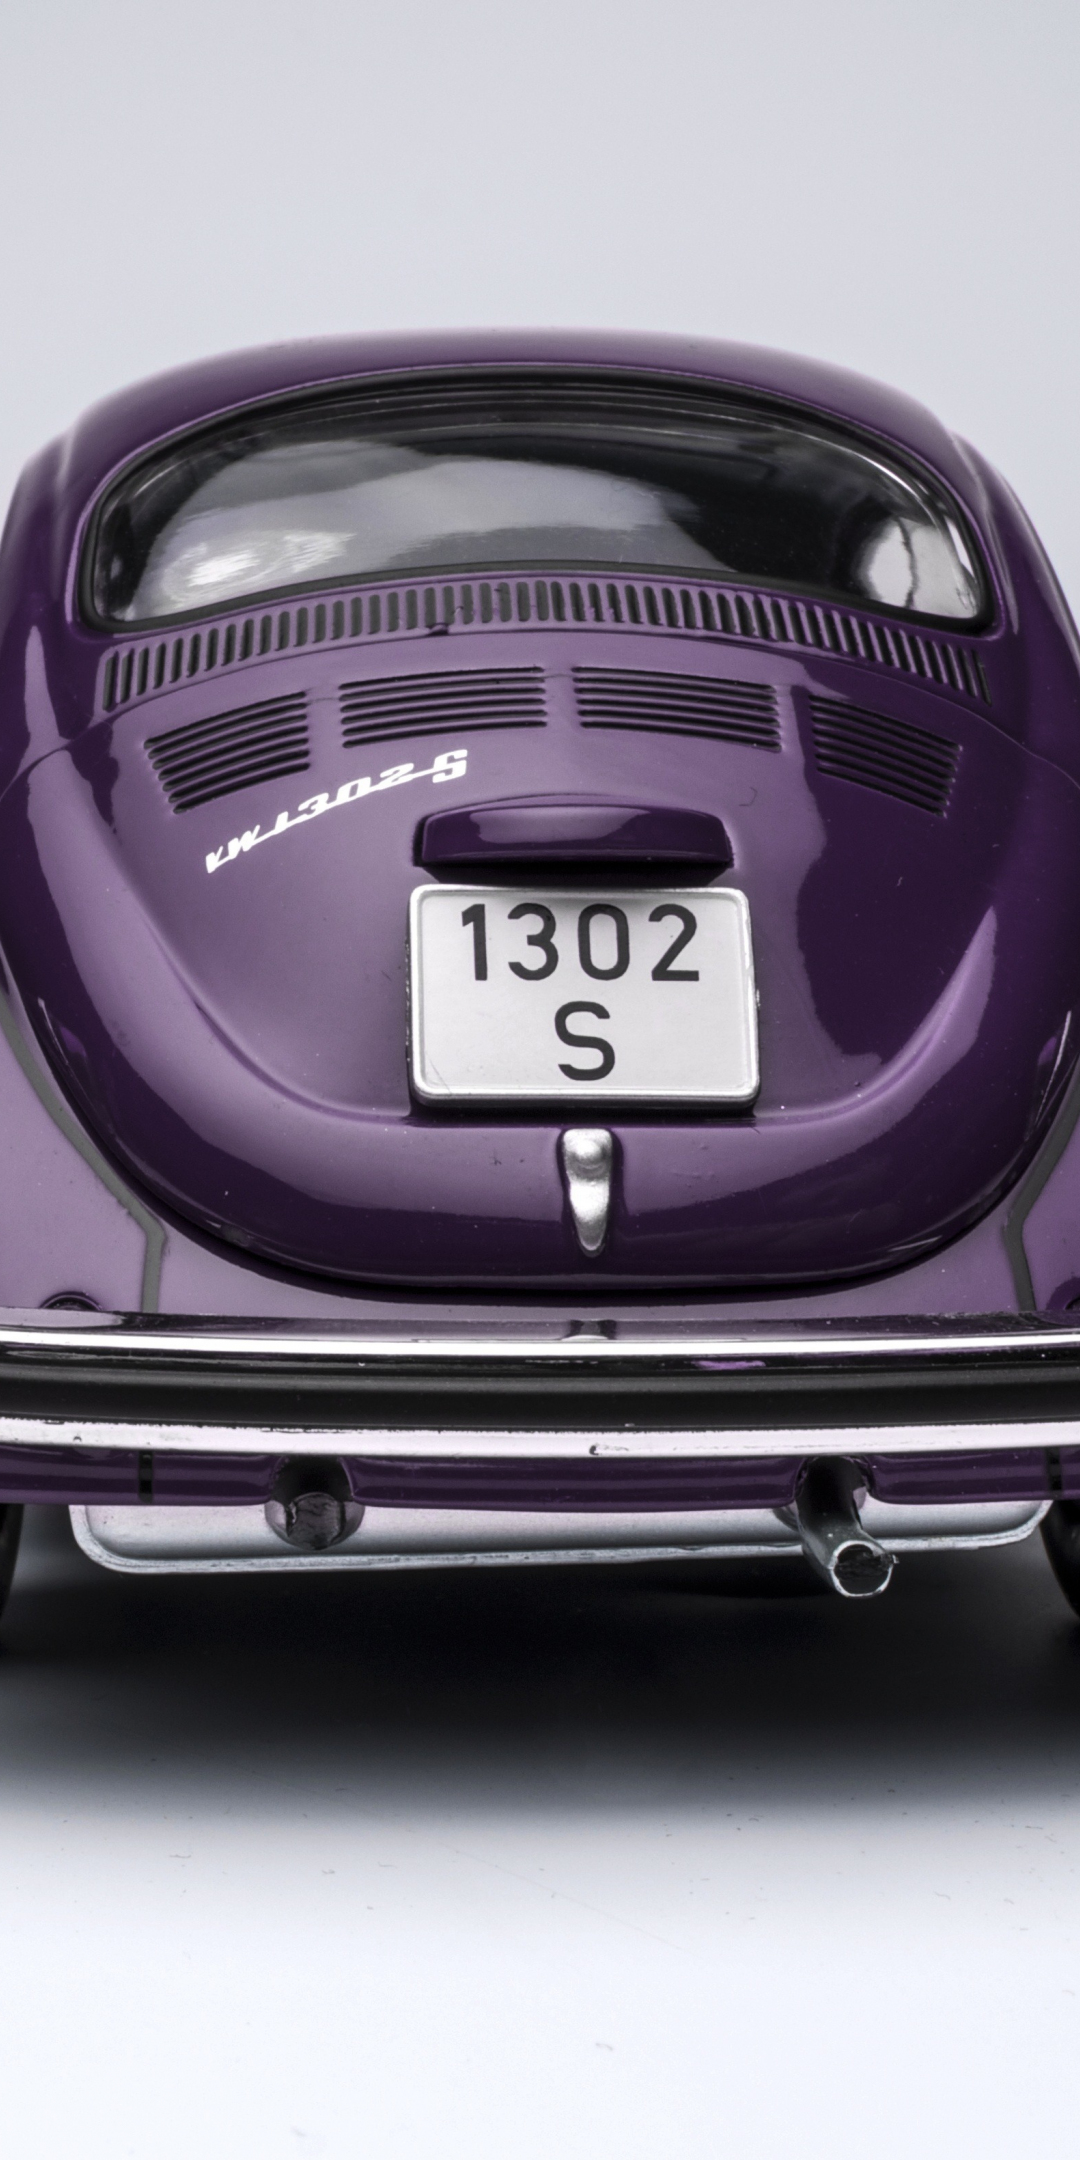 Volkswagen Beetle, car, toy, rear, 1080x2160 wallpaper